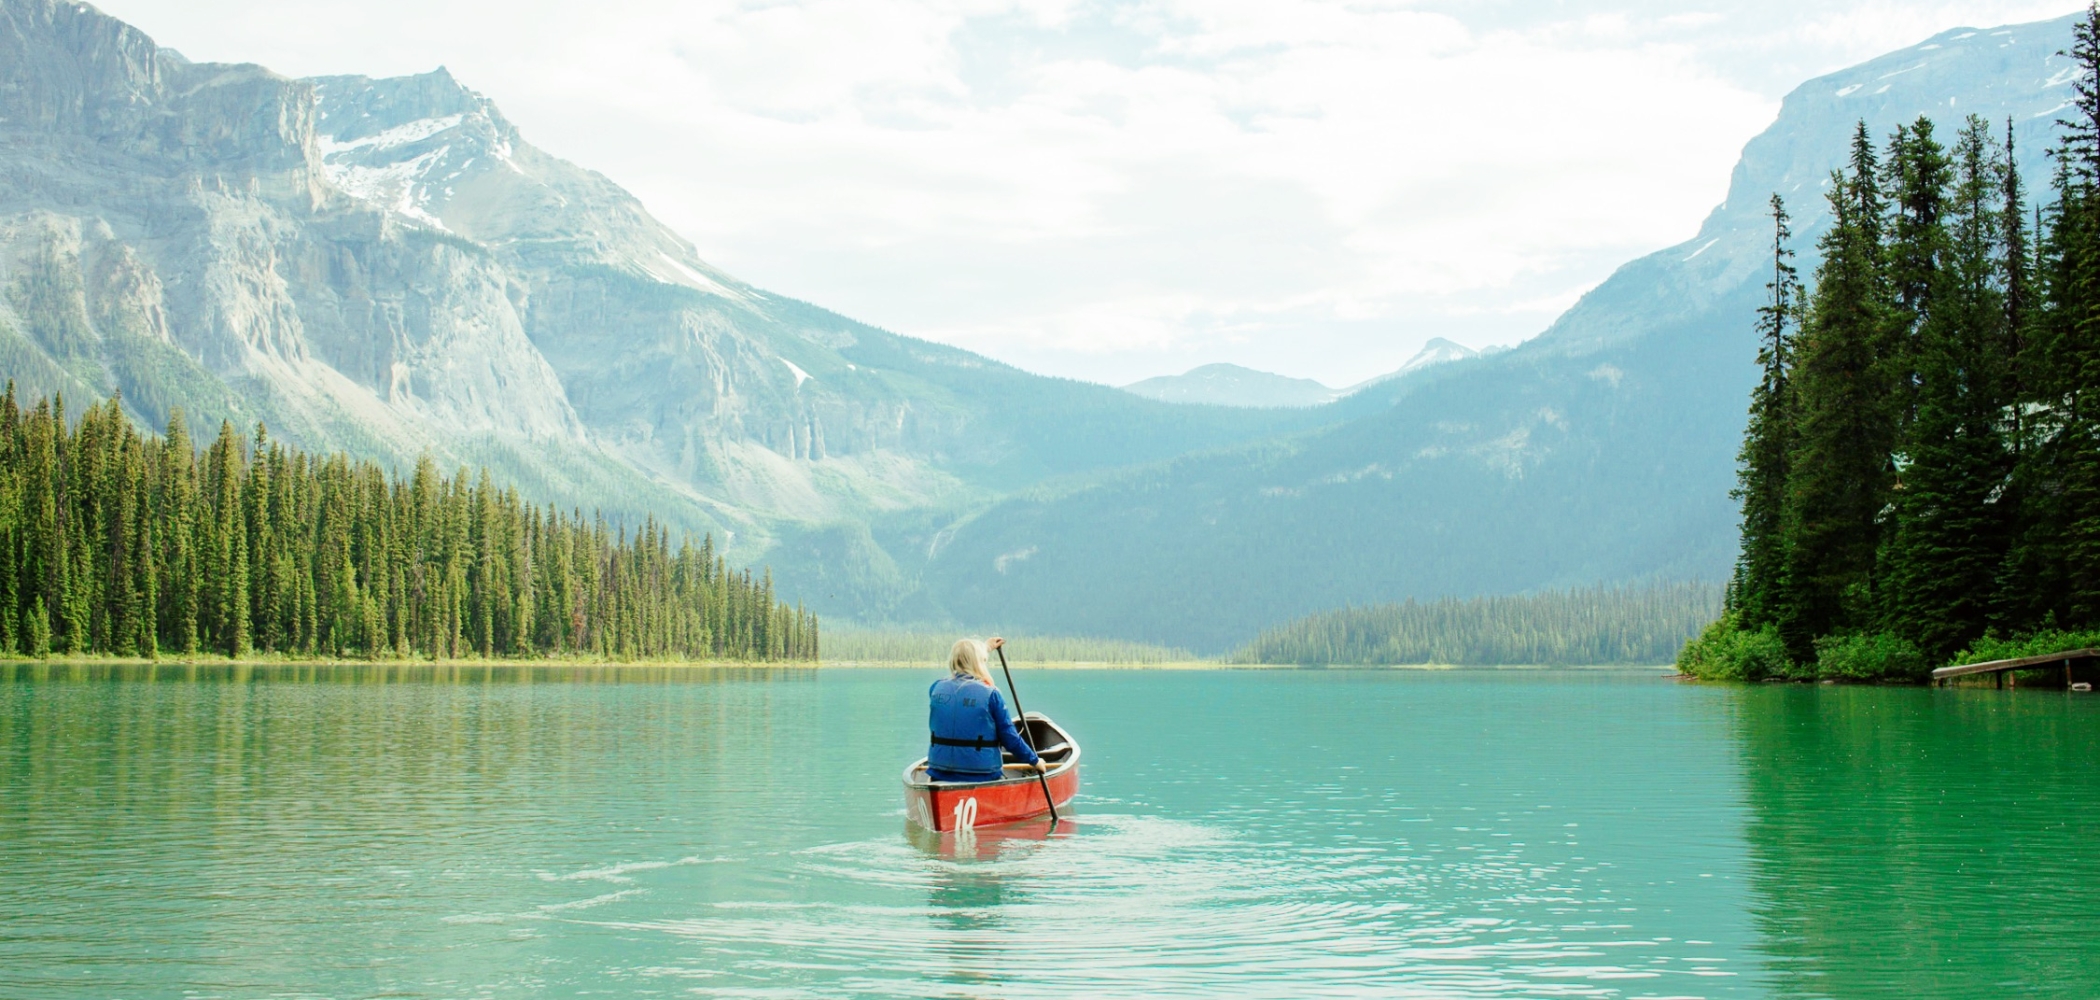 Canoeing on Emerald Lake - Kamil Bialous